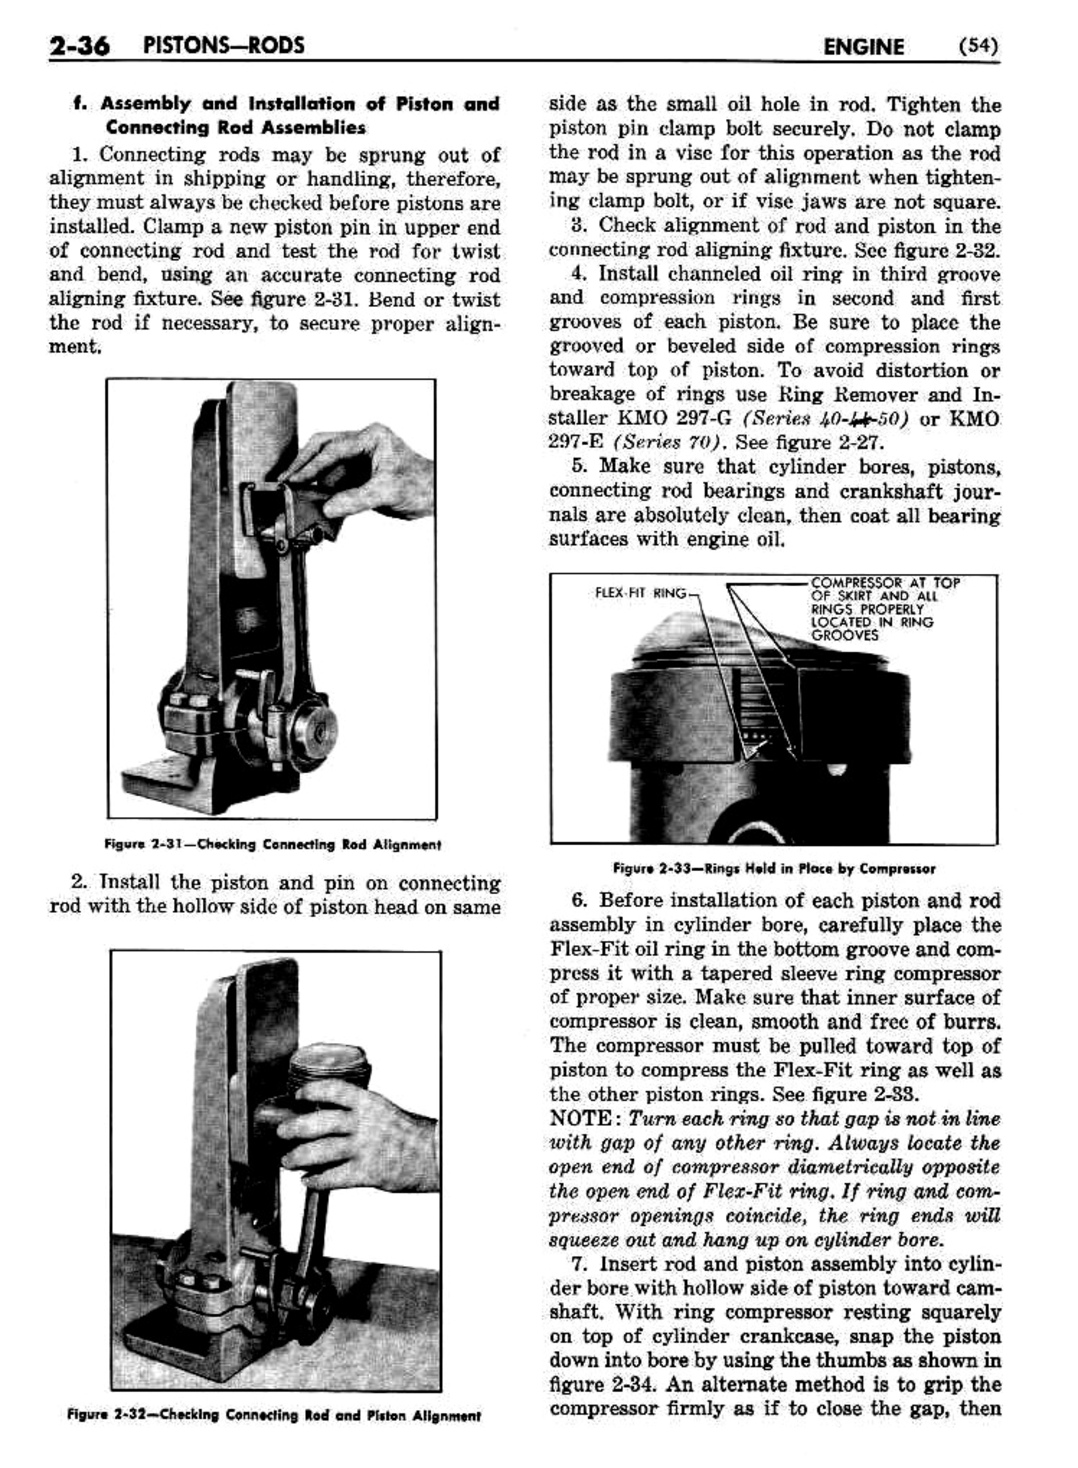 n_03 1951 Buick Shop Manual - Engine-036-036.jpg